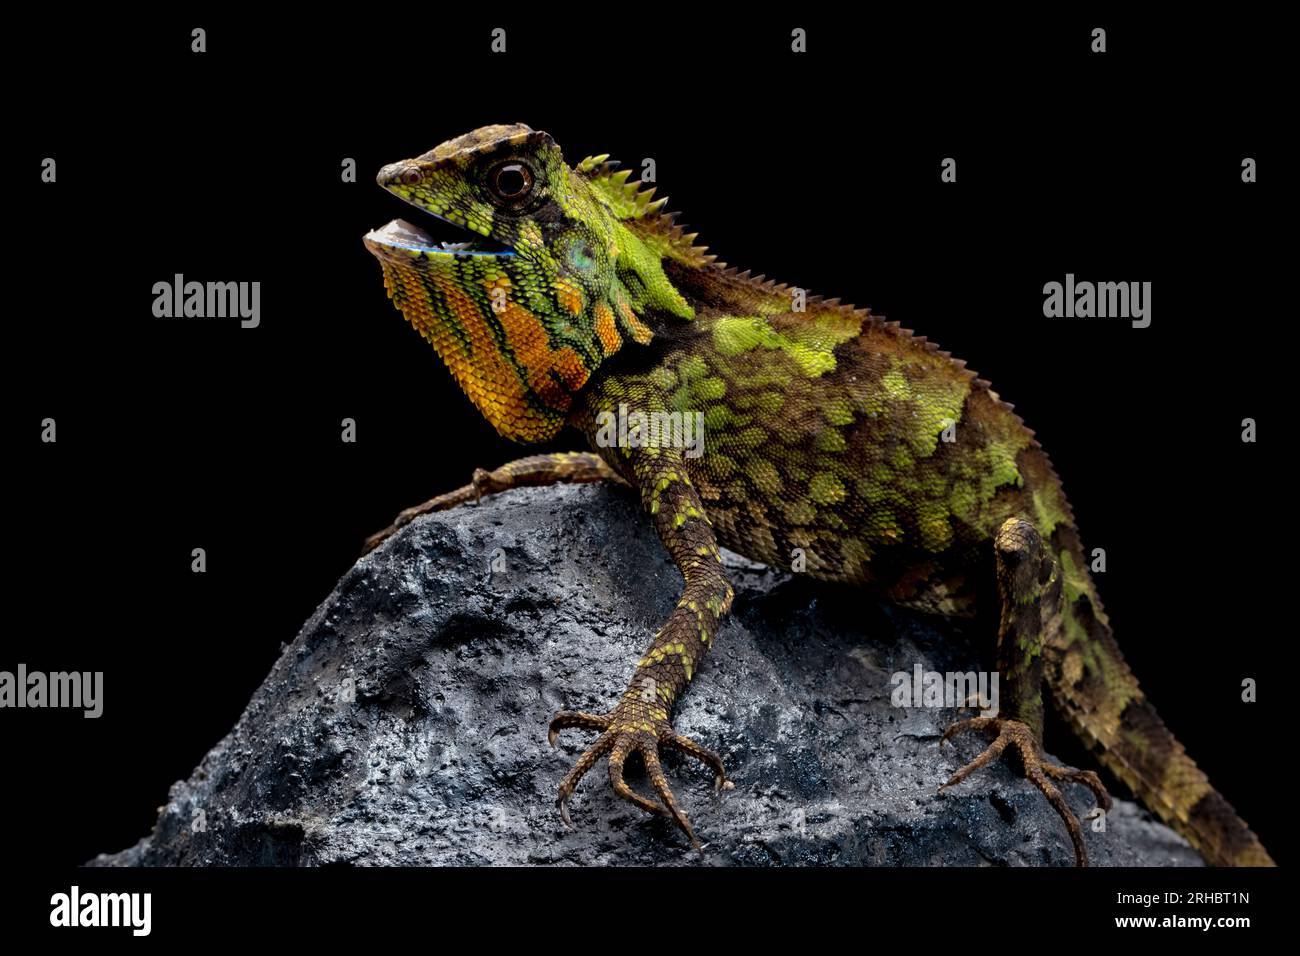 Kuhl's angelhead lizard (Gonocephalus kuhlii) on a rock, Indonesia Stock Photo